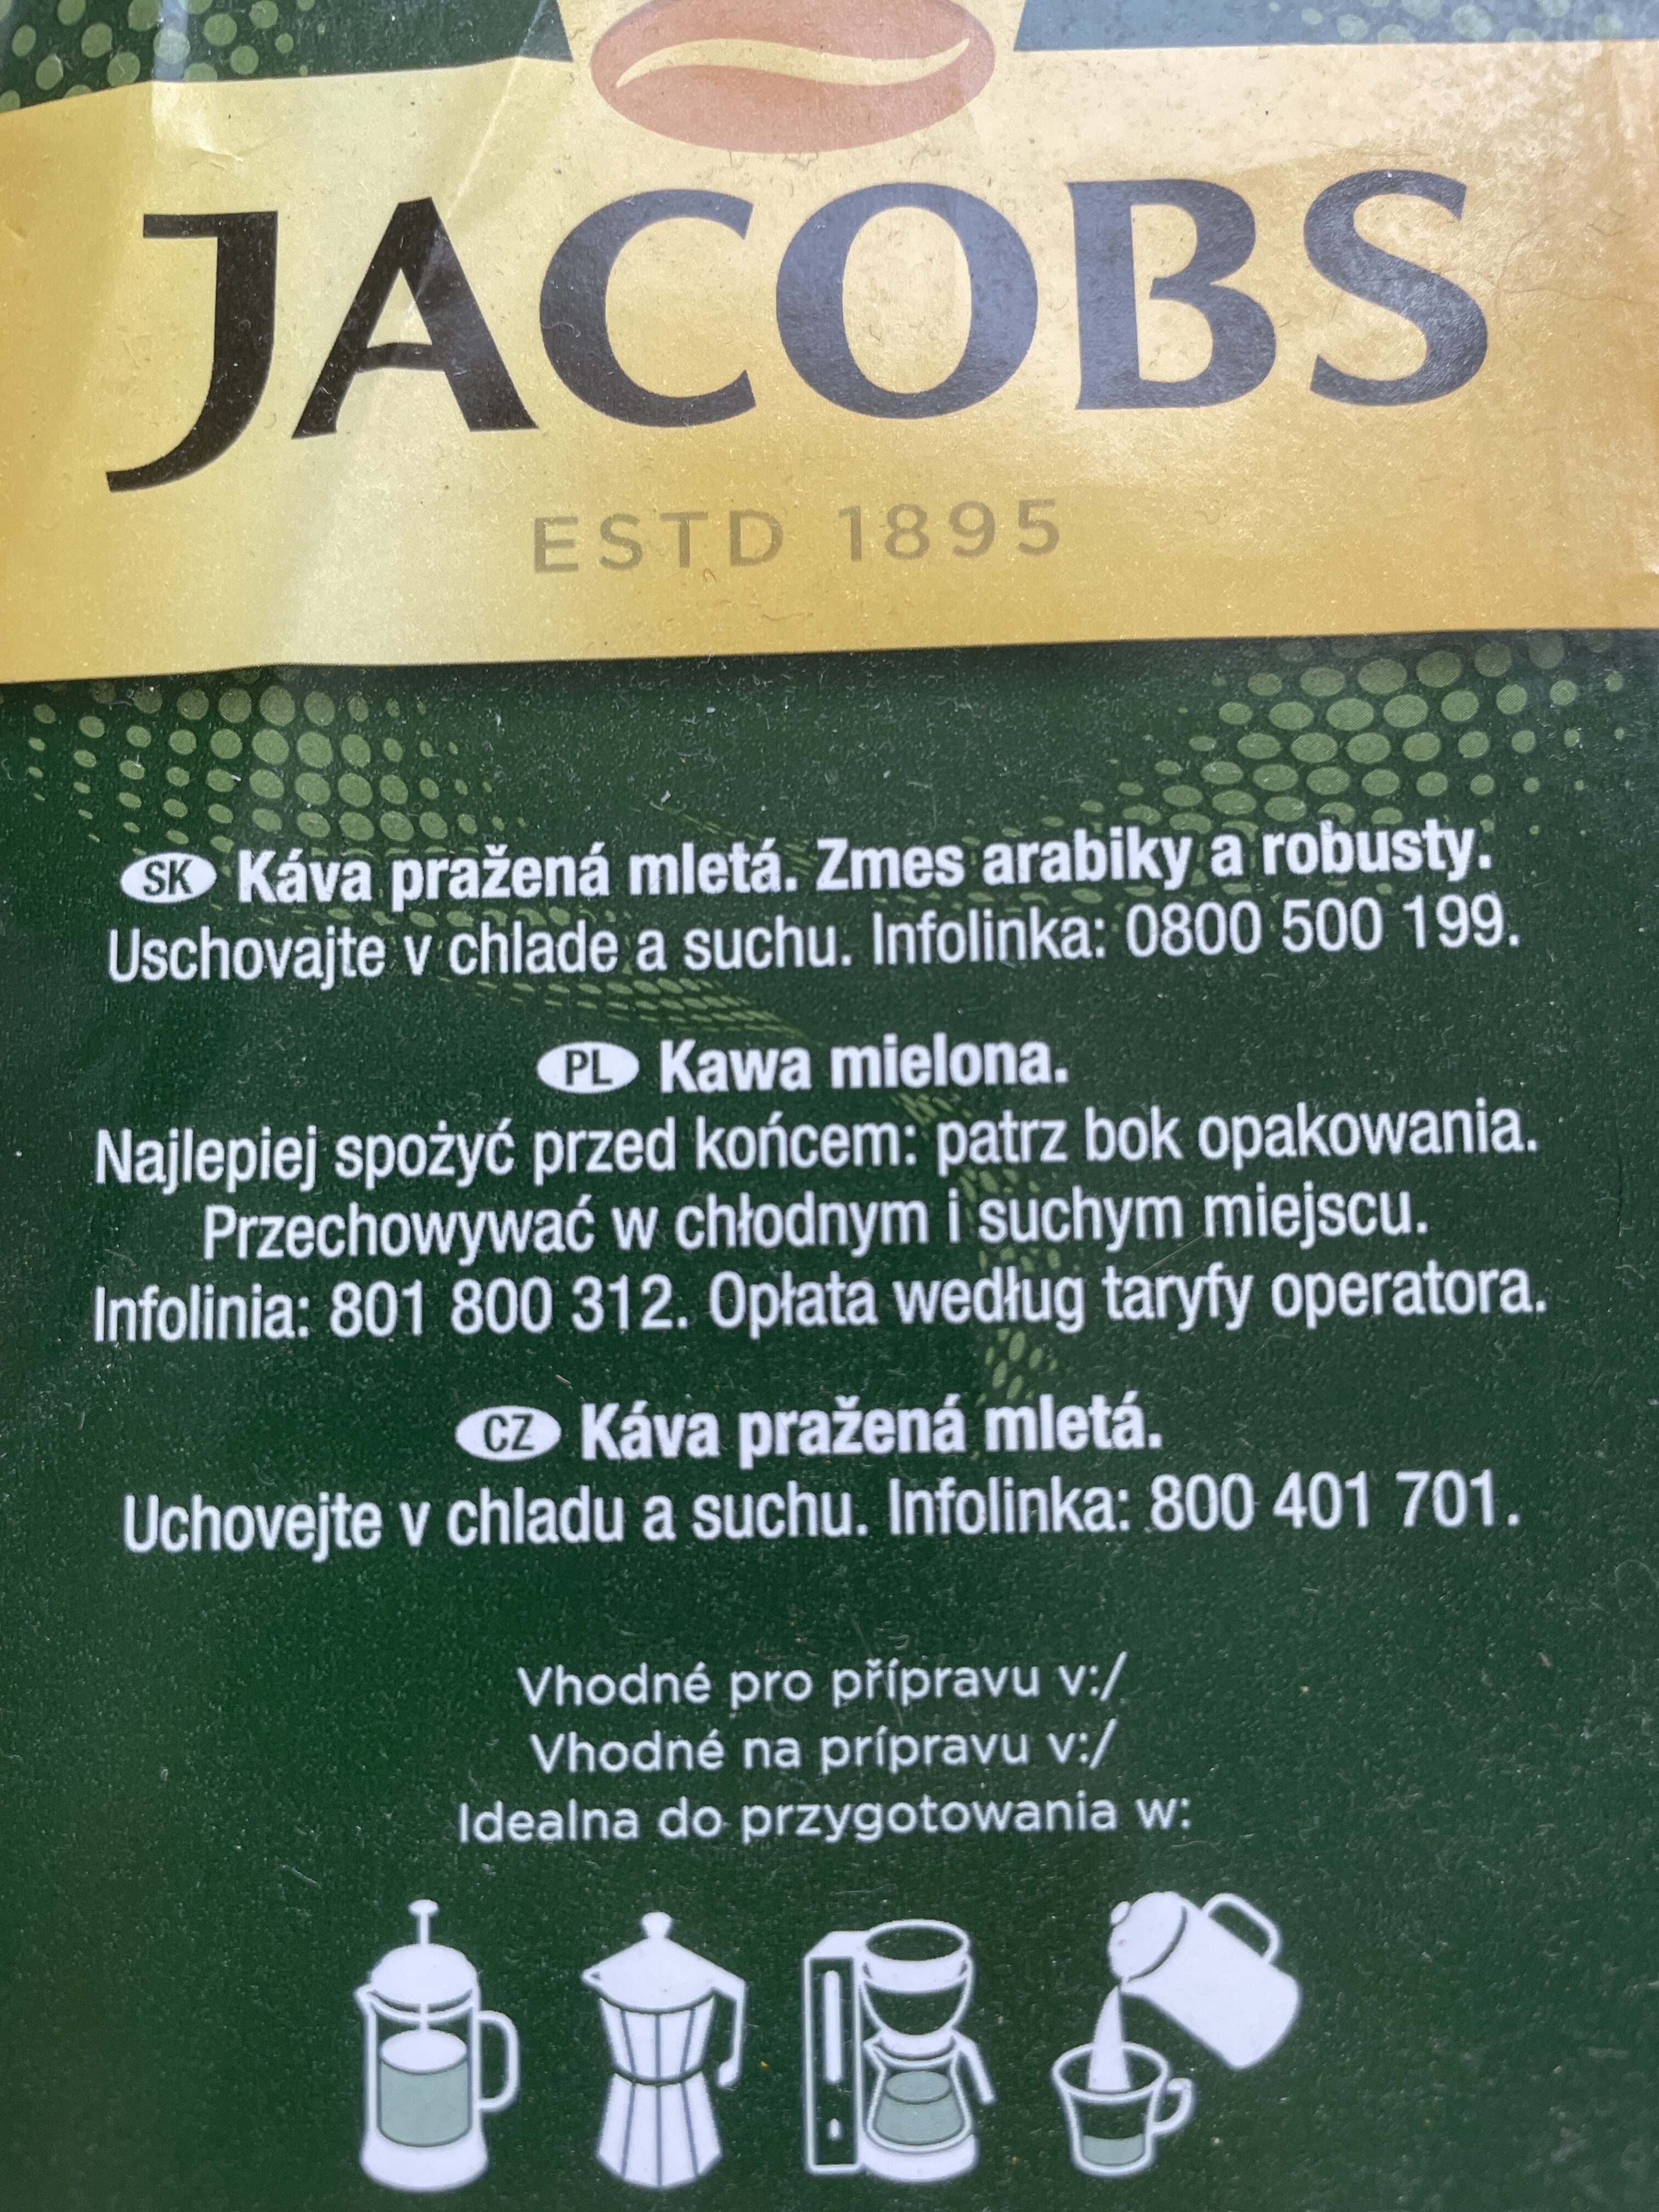 JACOBS KRONUNG - Składniki